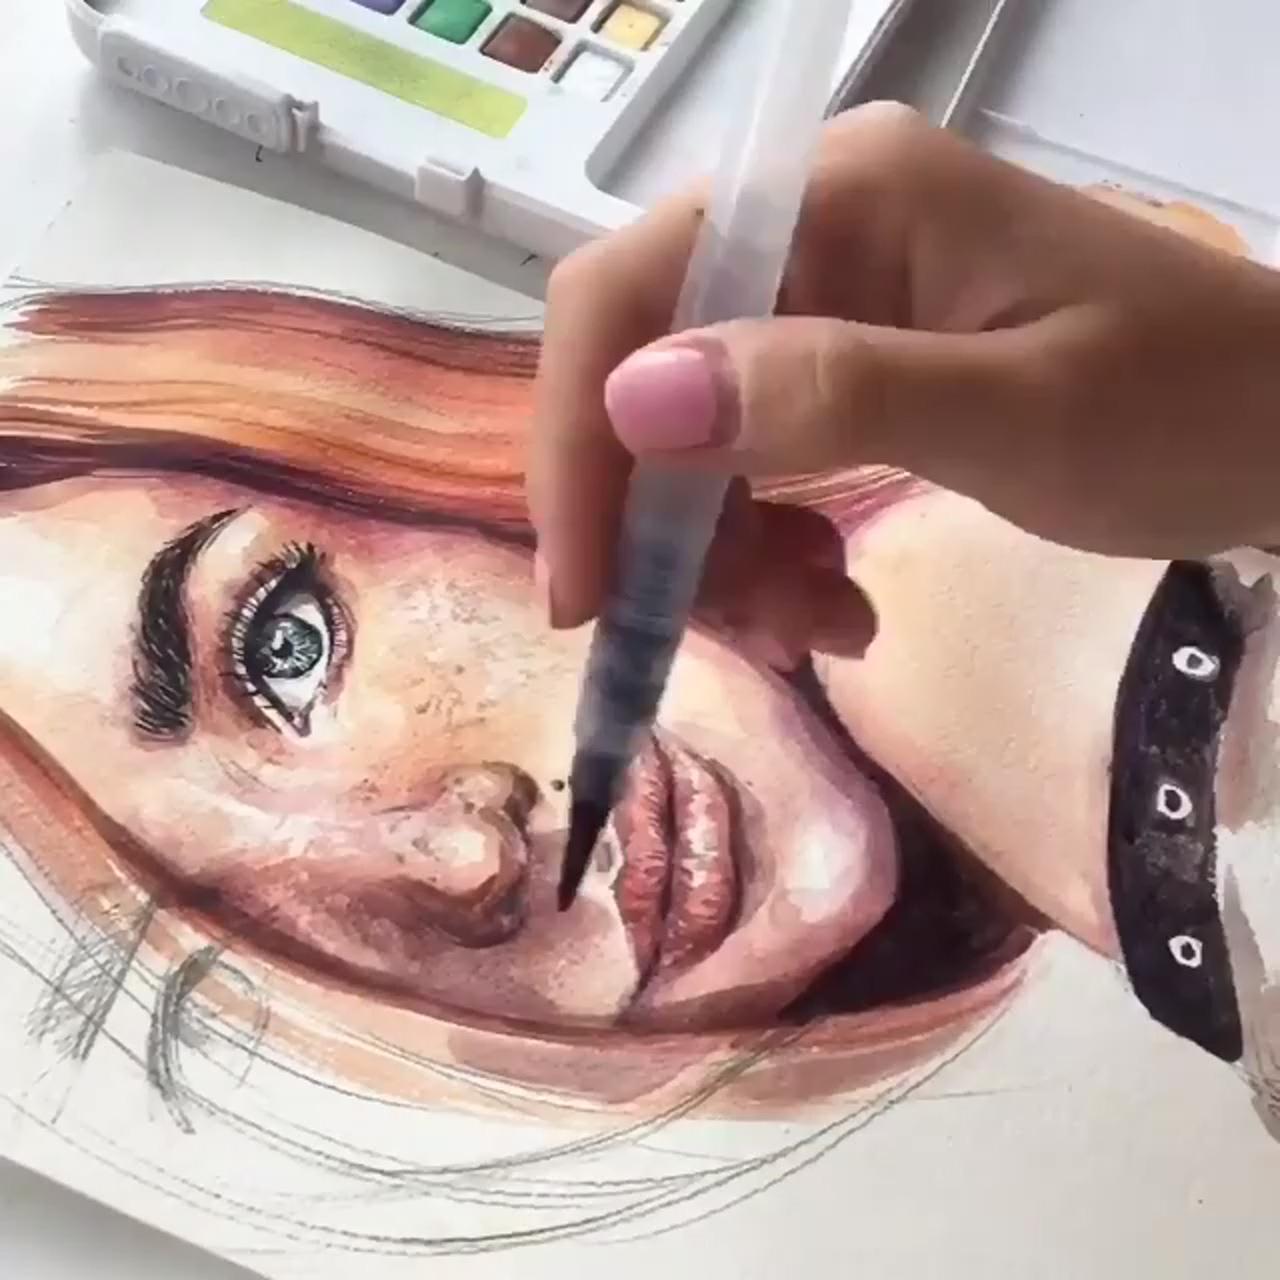 Draw hyperrealistic eye watercolor painting; how to draw hyper realistic eyes watercolor painting